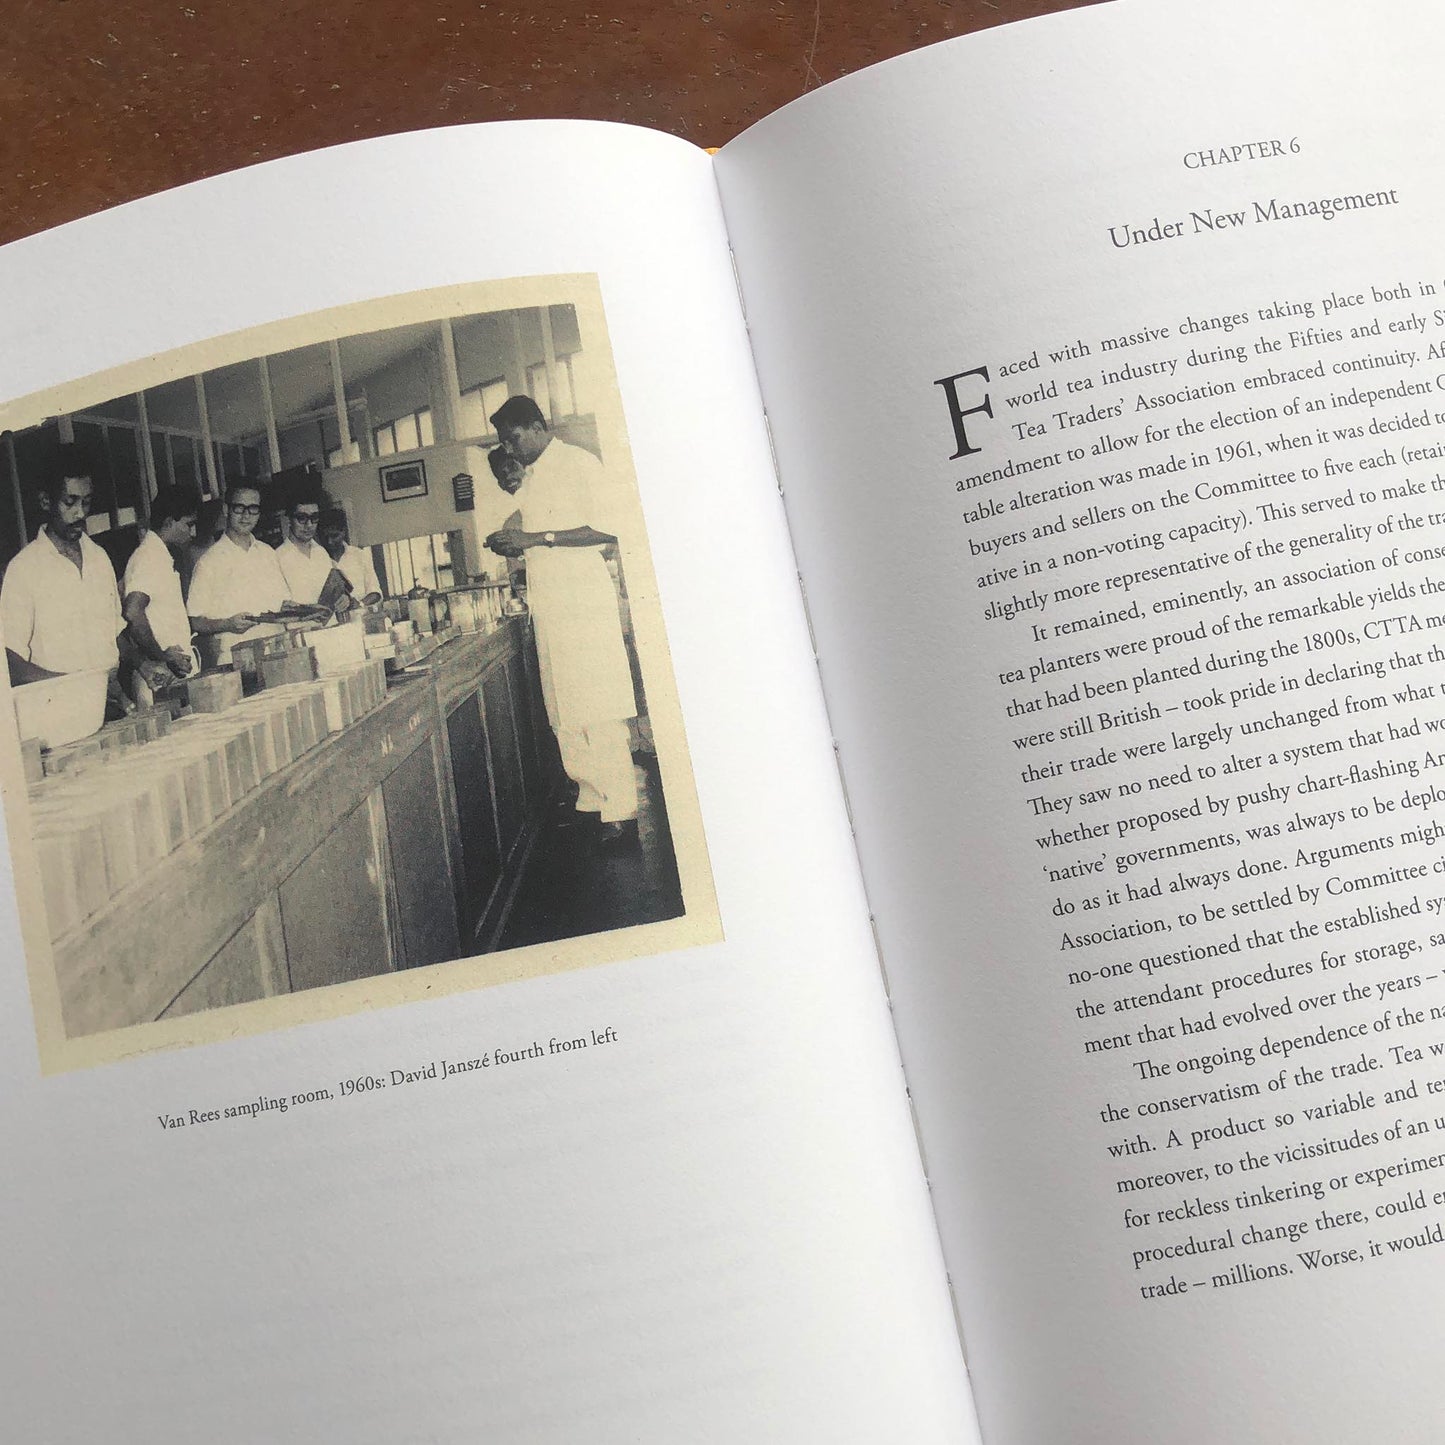 Tea Men: 125 Years of the Colombo Tea Traders’ Association by Ajit Chittambalam